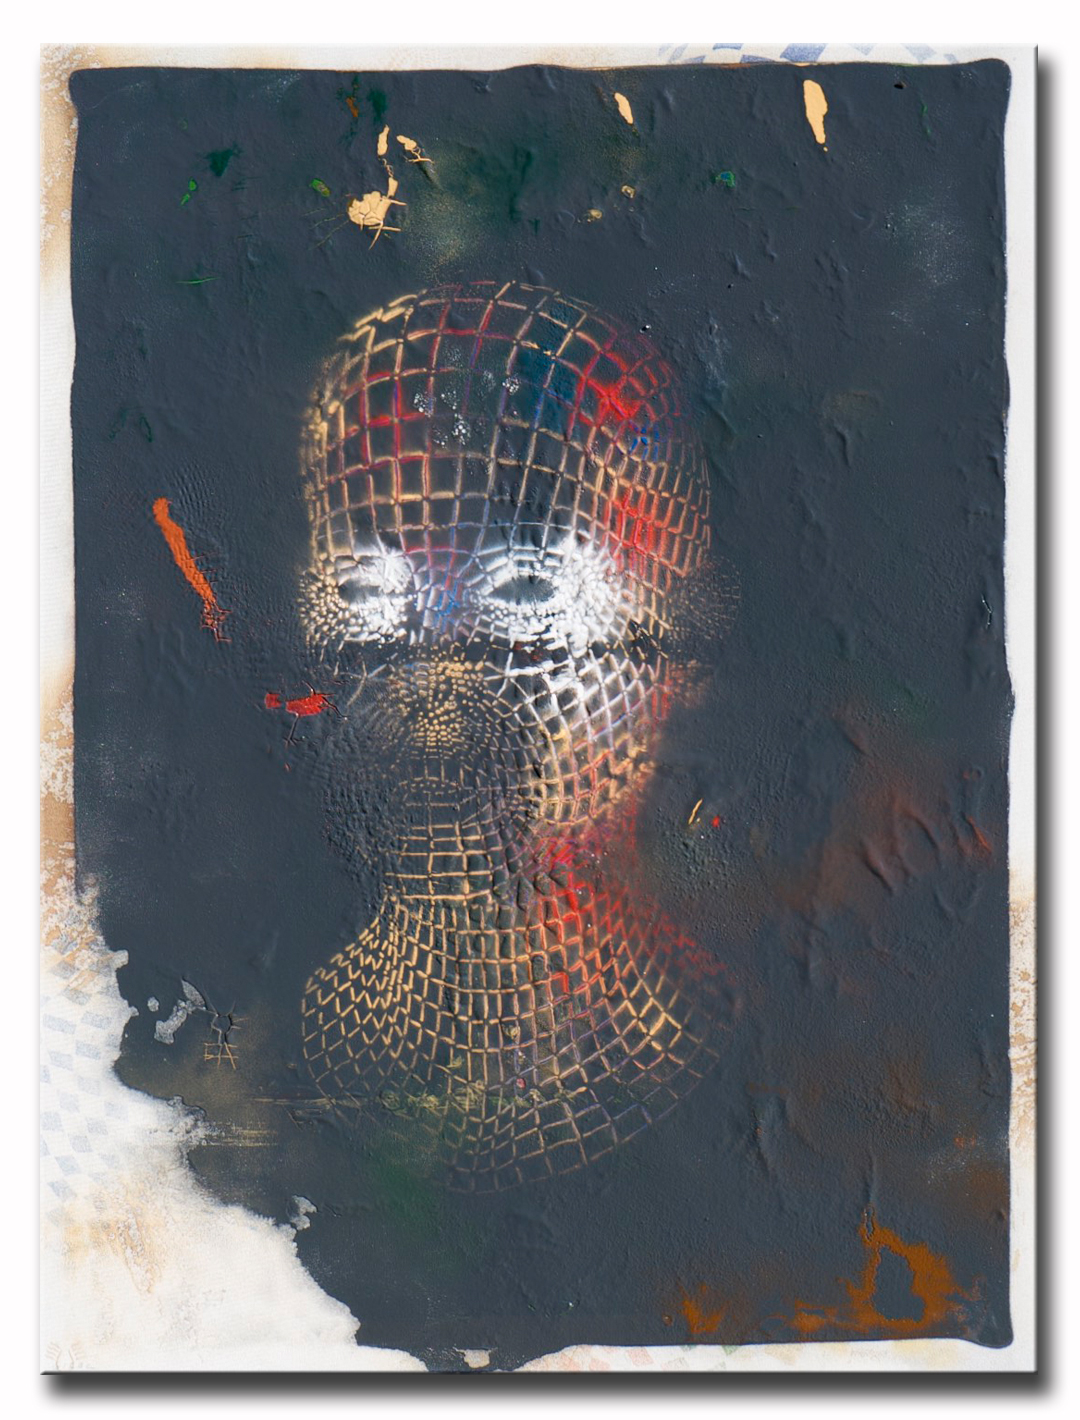 Thomas Girbl "Tomorrow" 120x160cm 2014